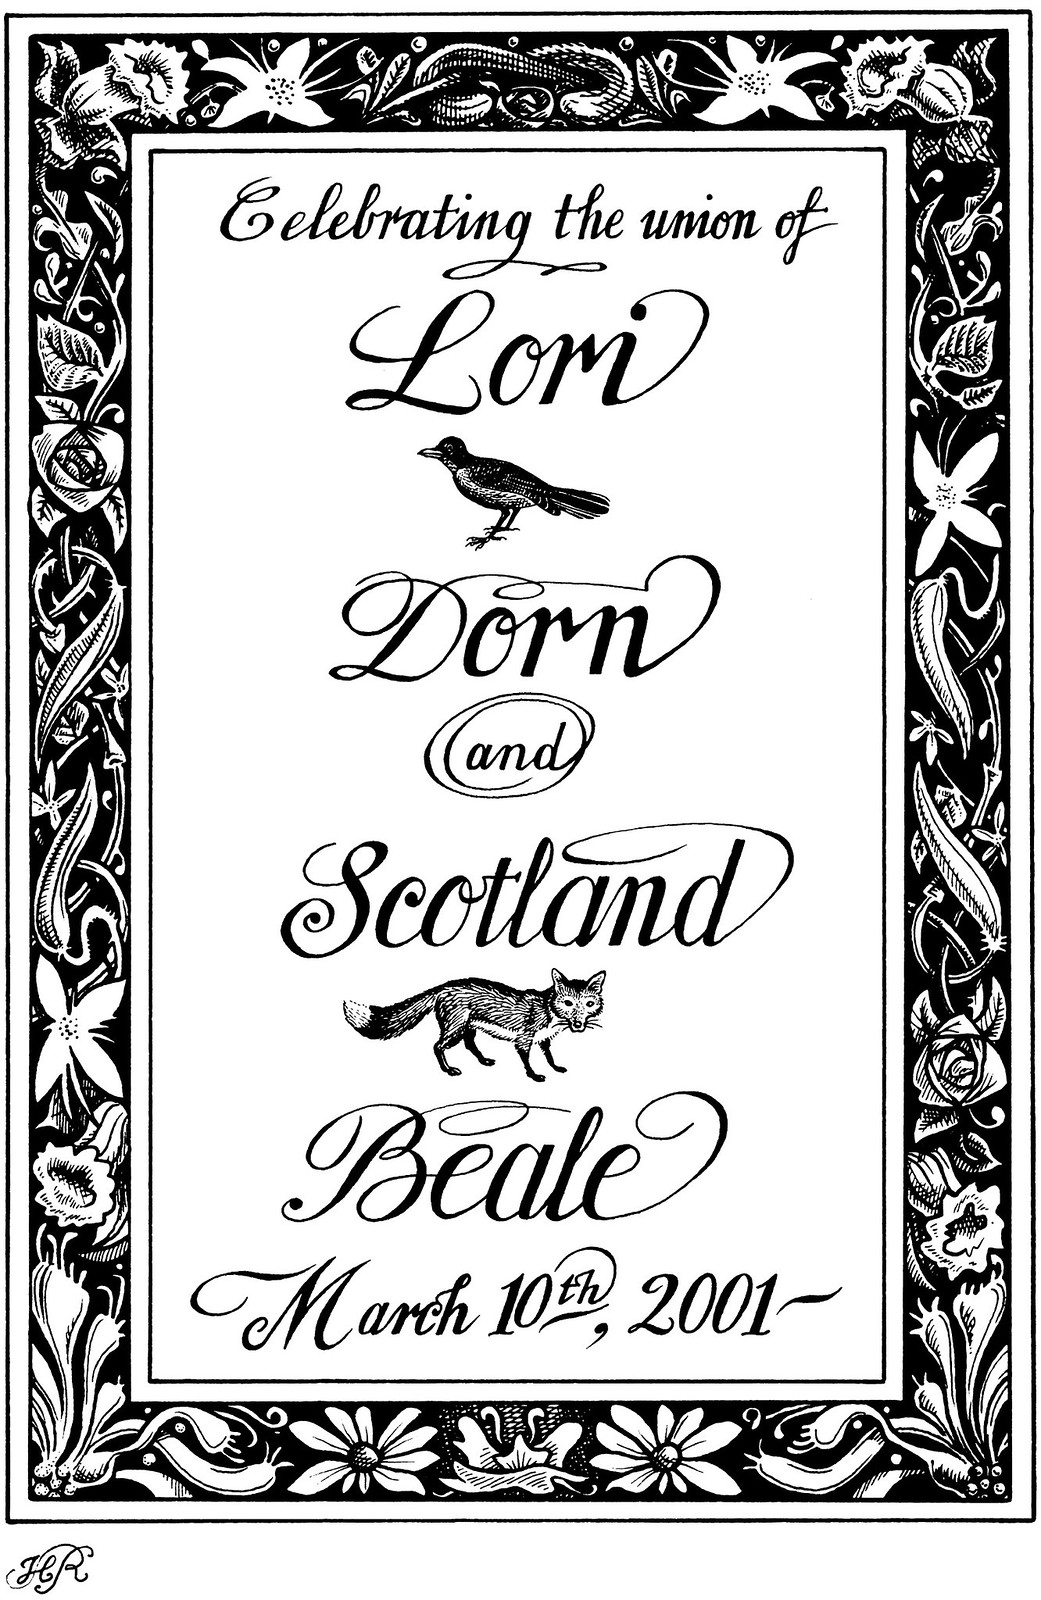 Lori Dorn & Scott Beale Wedding Invitation (front)